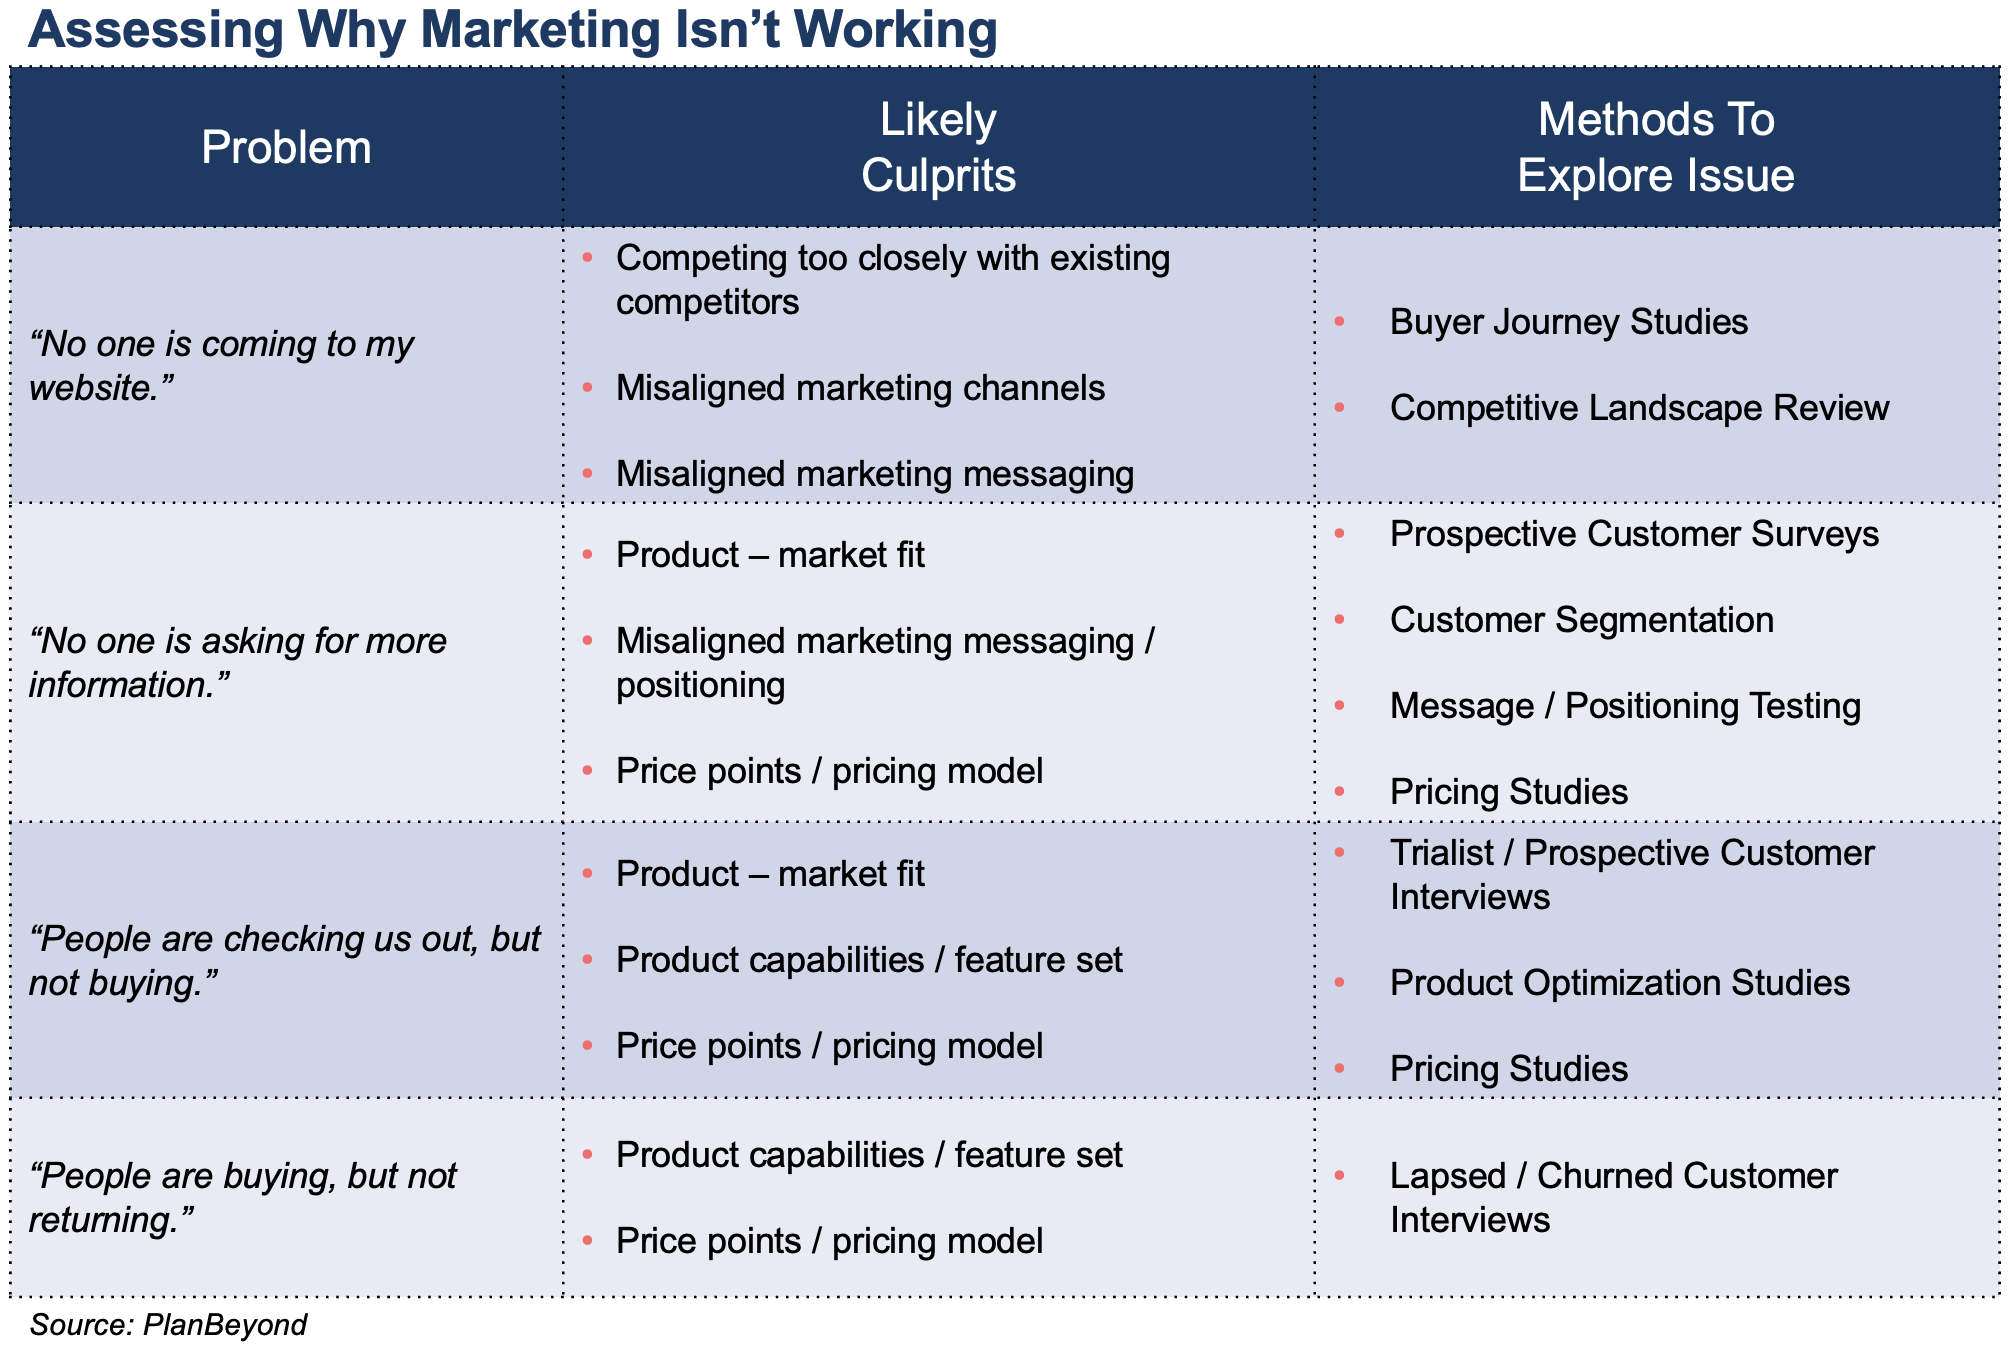 Assess Why Marketing Isn't Working